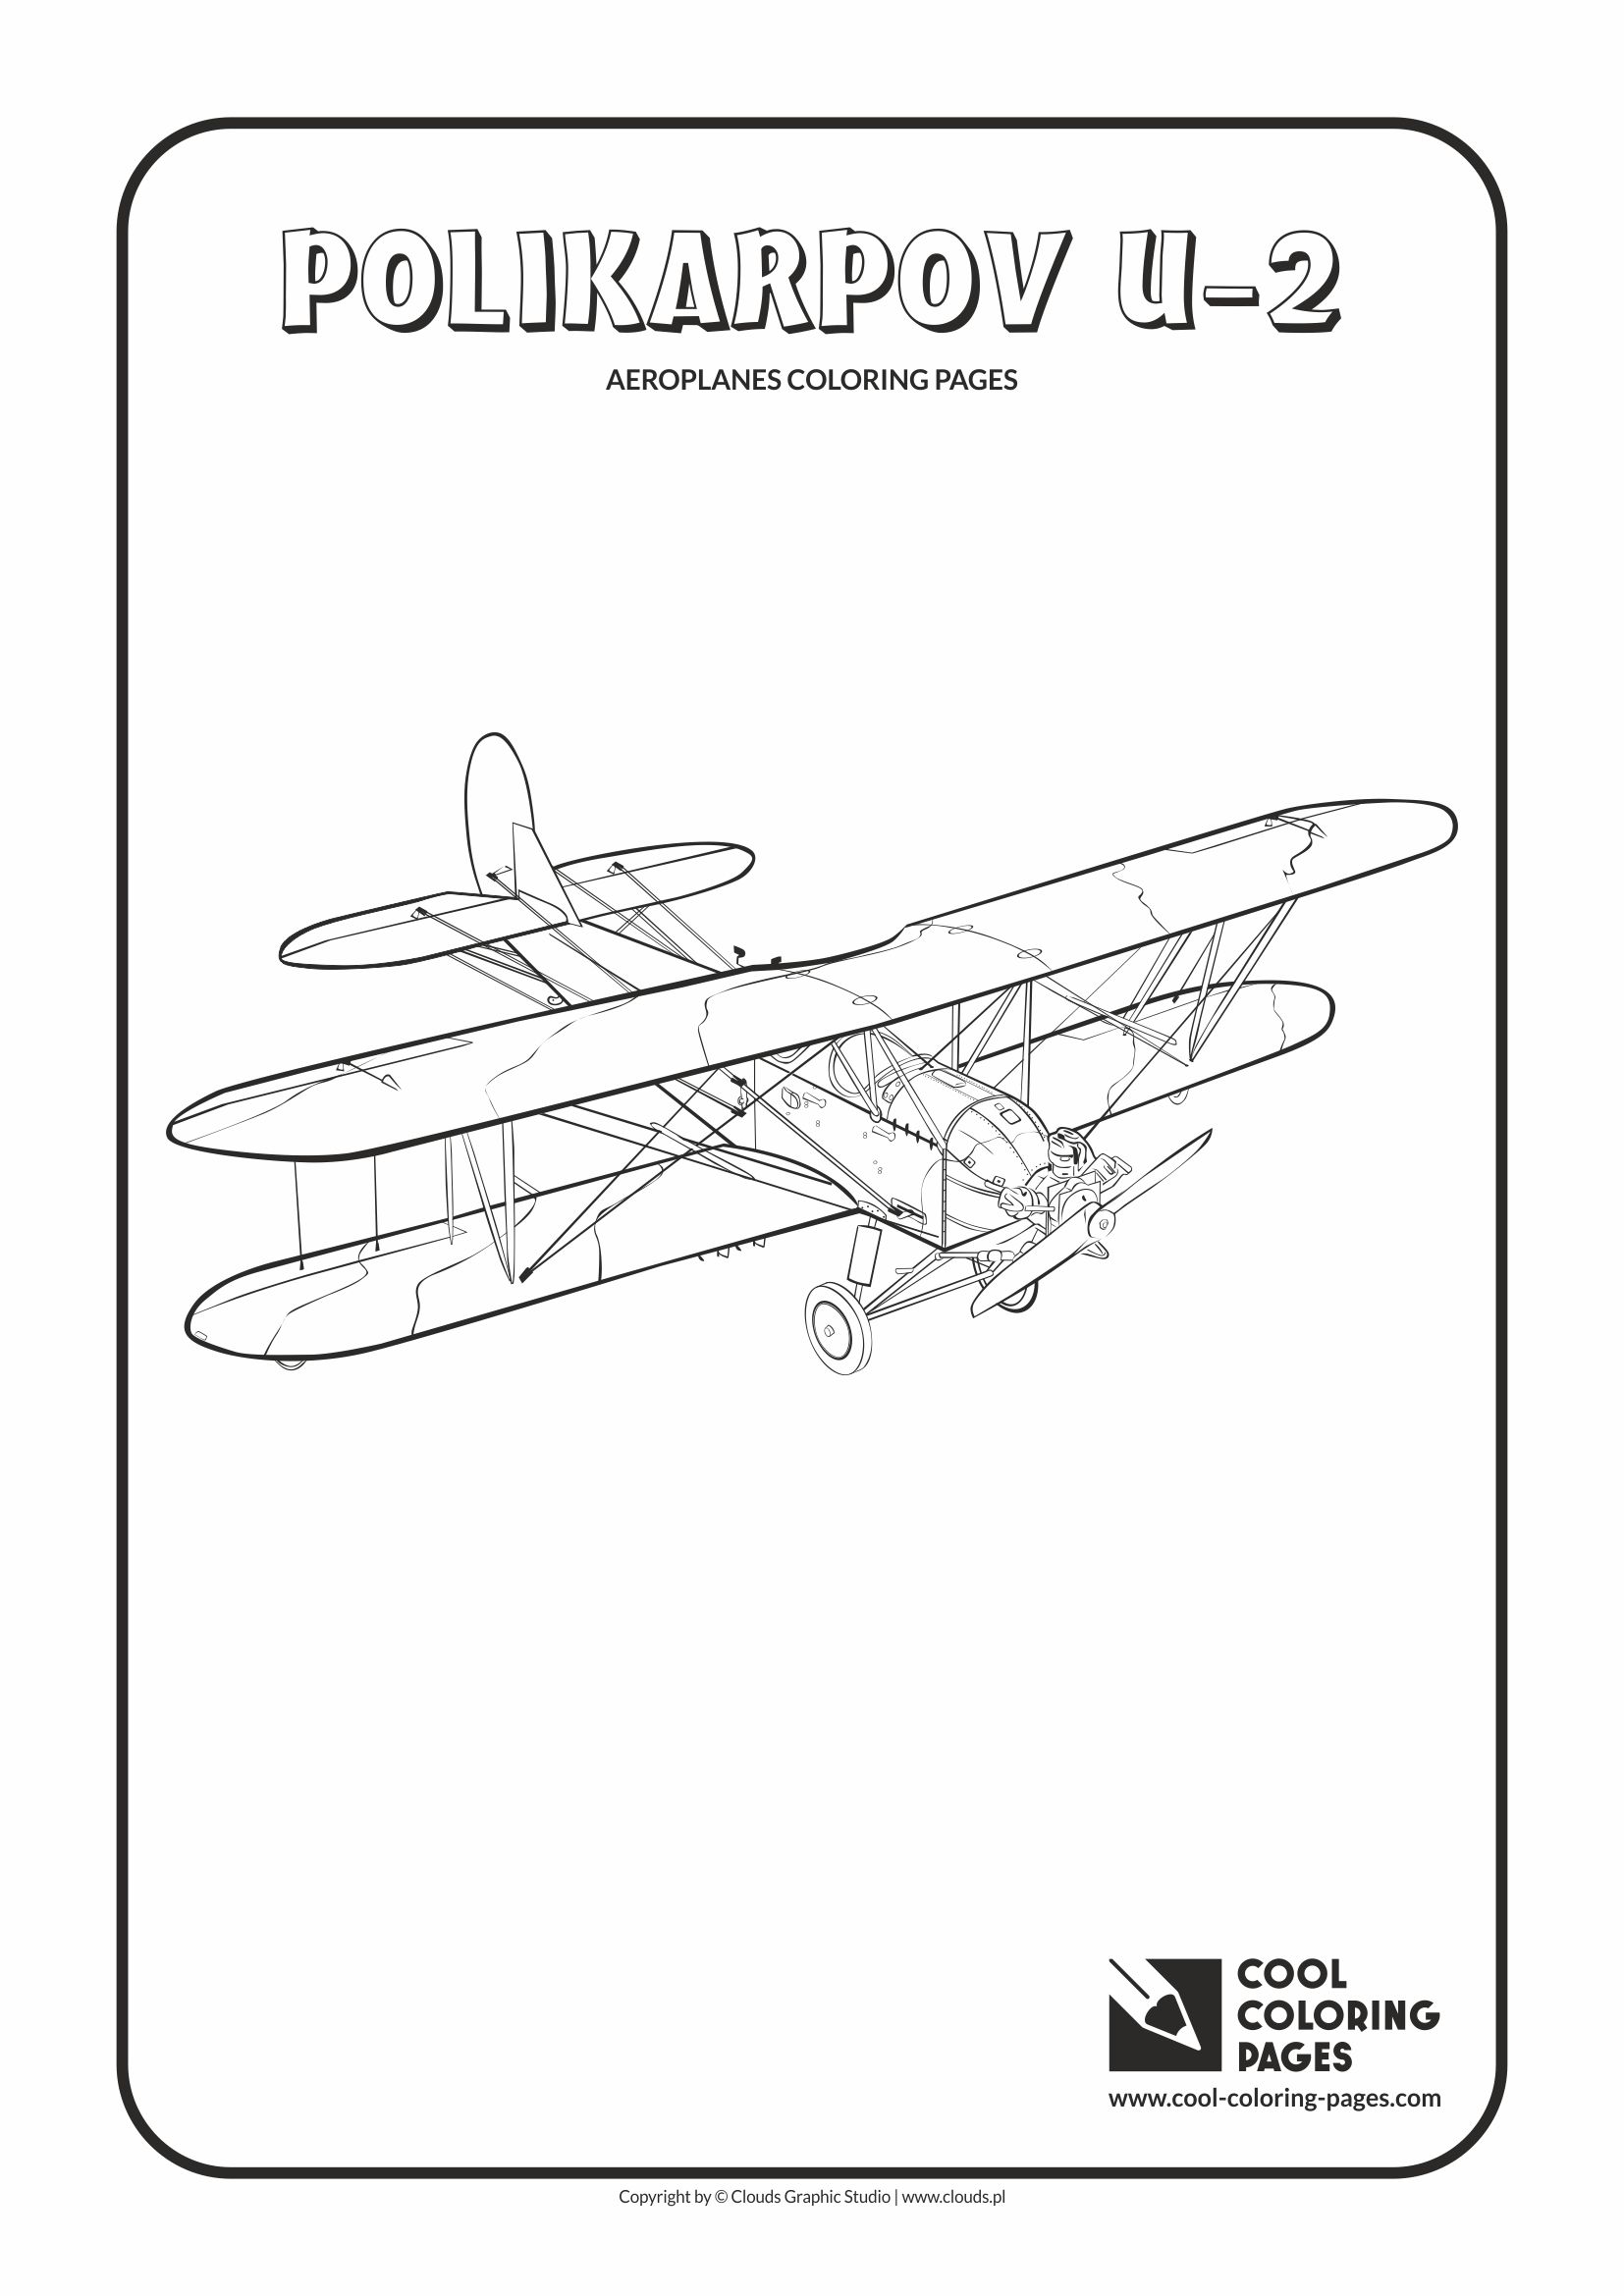 Cool Coloring Pages - Vehicles / Polikarpov U-2 po-2 / Coloring page with Polikarpov U-2 po-2